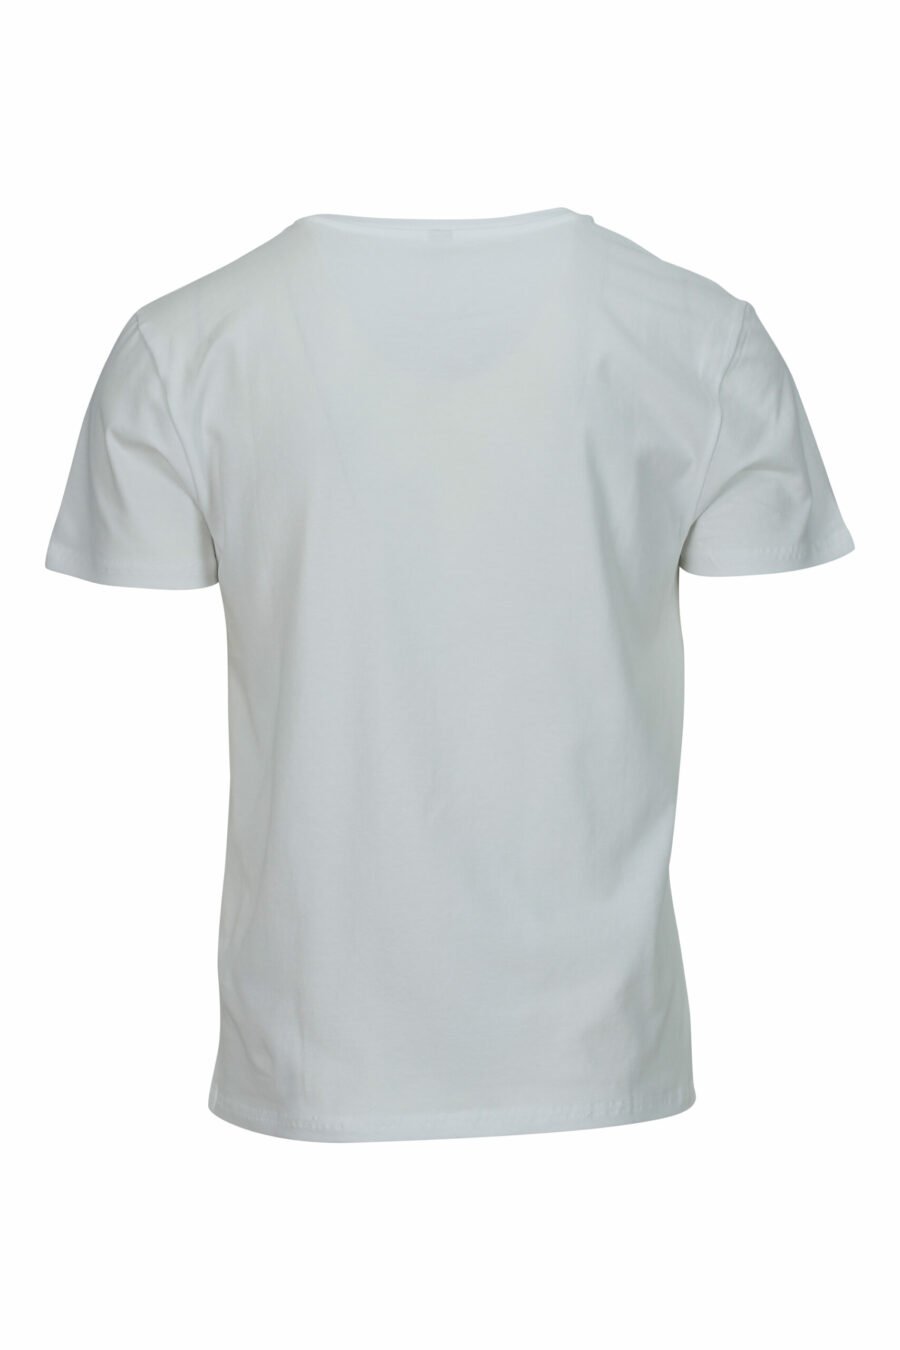 Camiseta blanca con minilogo "swim" - 667113673356 1 scaled